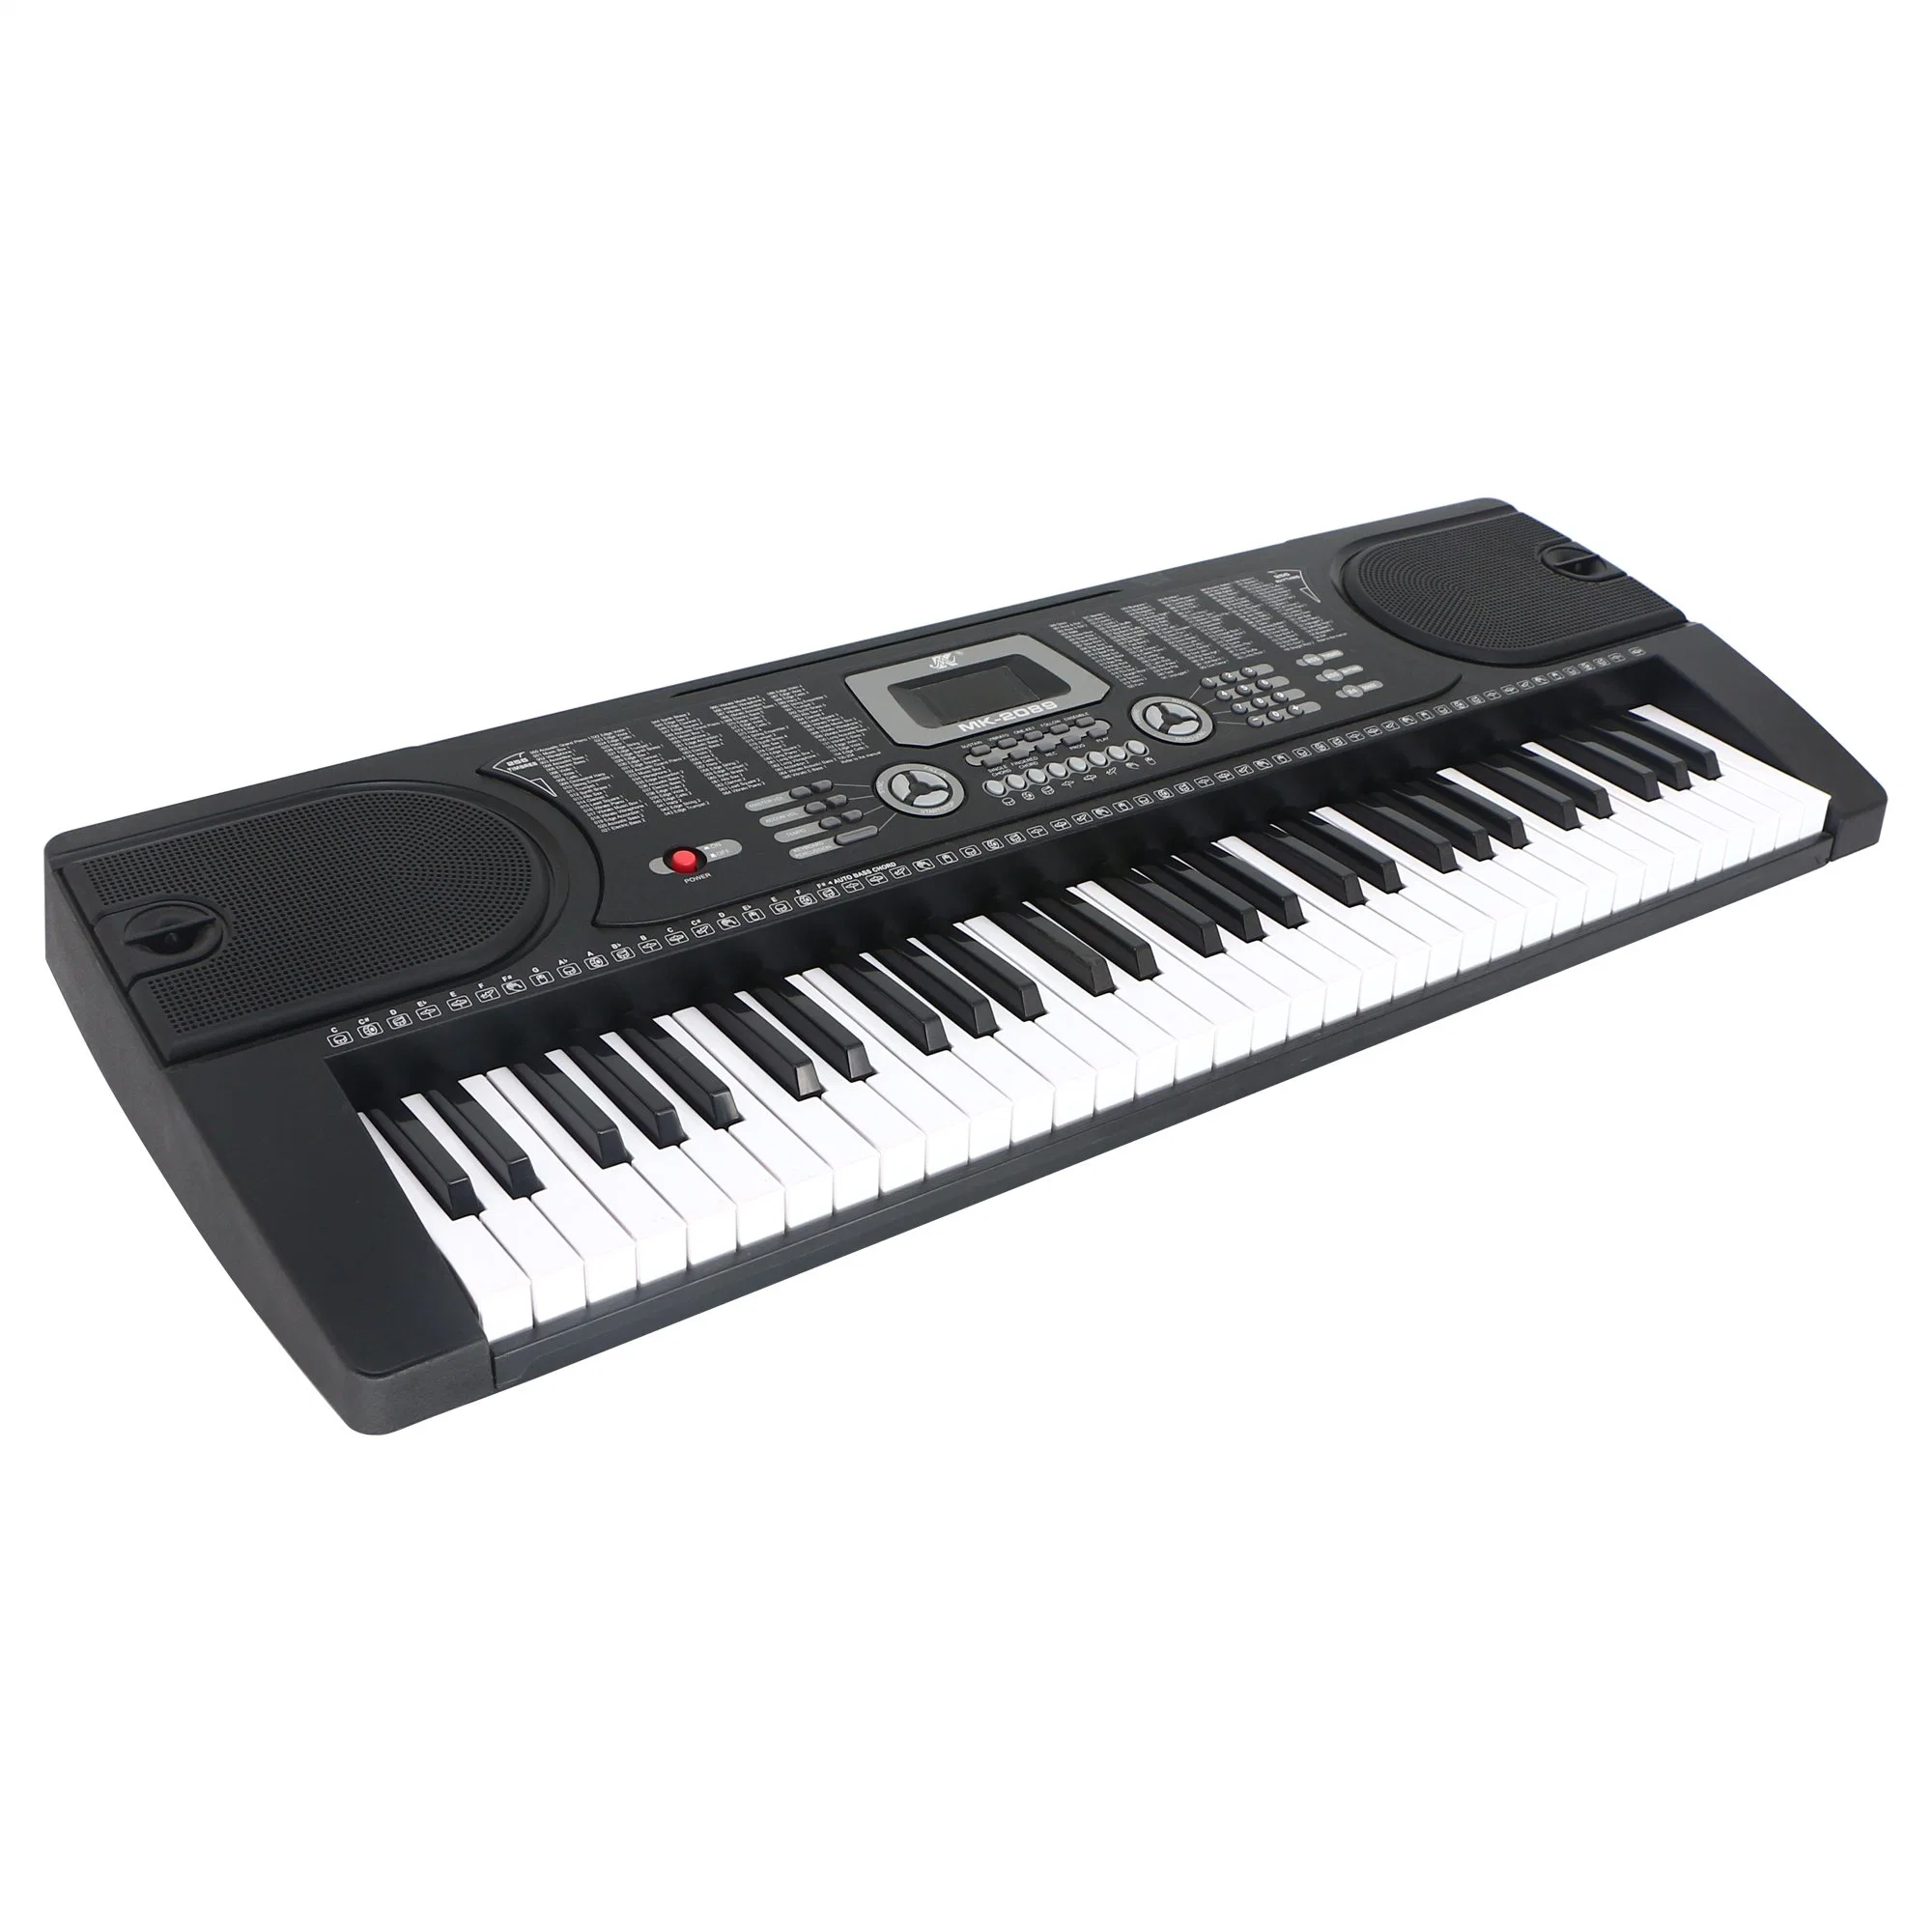 Mk2089 Chinese Cheap Musical Instruments YAMAHA Keyboard Piano Oriental Keyboard 54/61keys Electric Organ for Student/Beginners